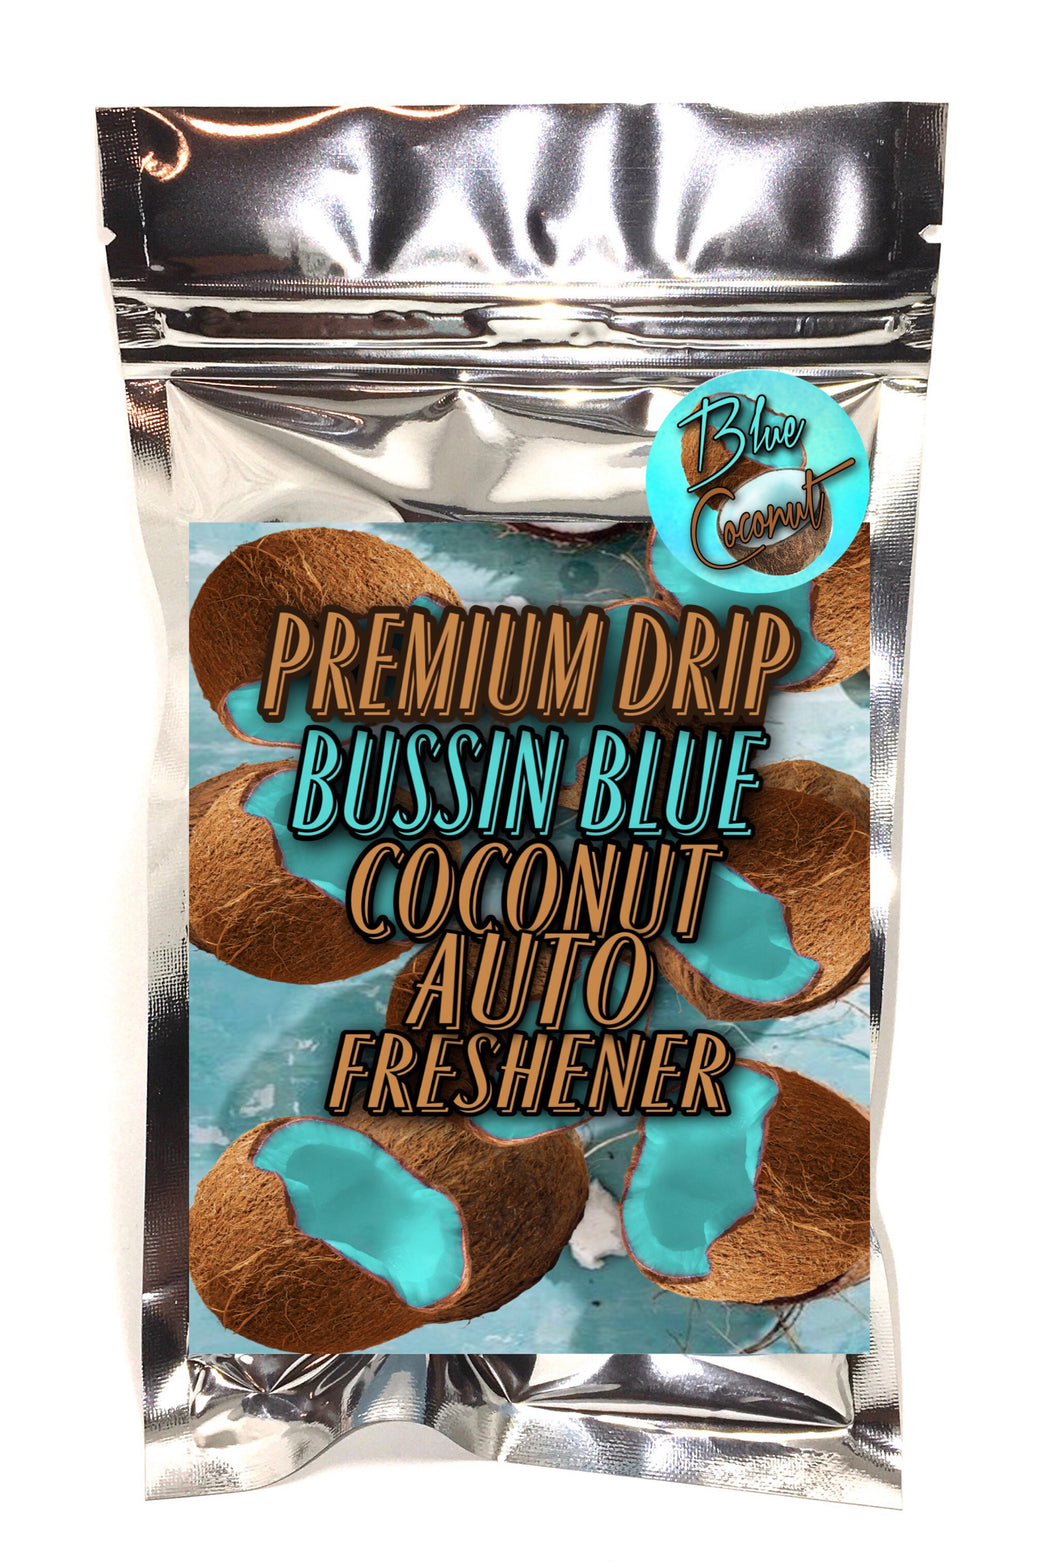 Premium Drip Auto Freshener Bussin Blue Coconut Sauce Pack